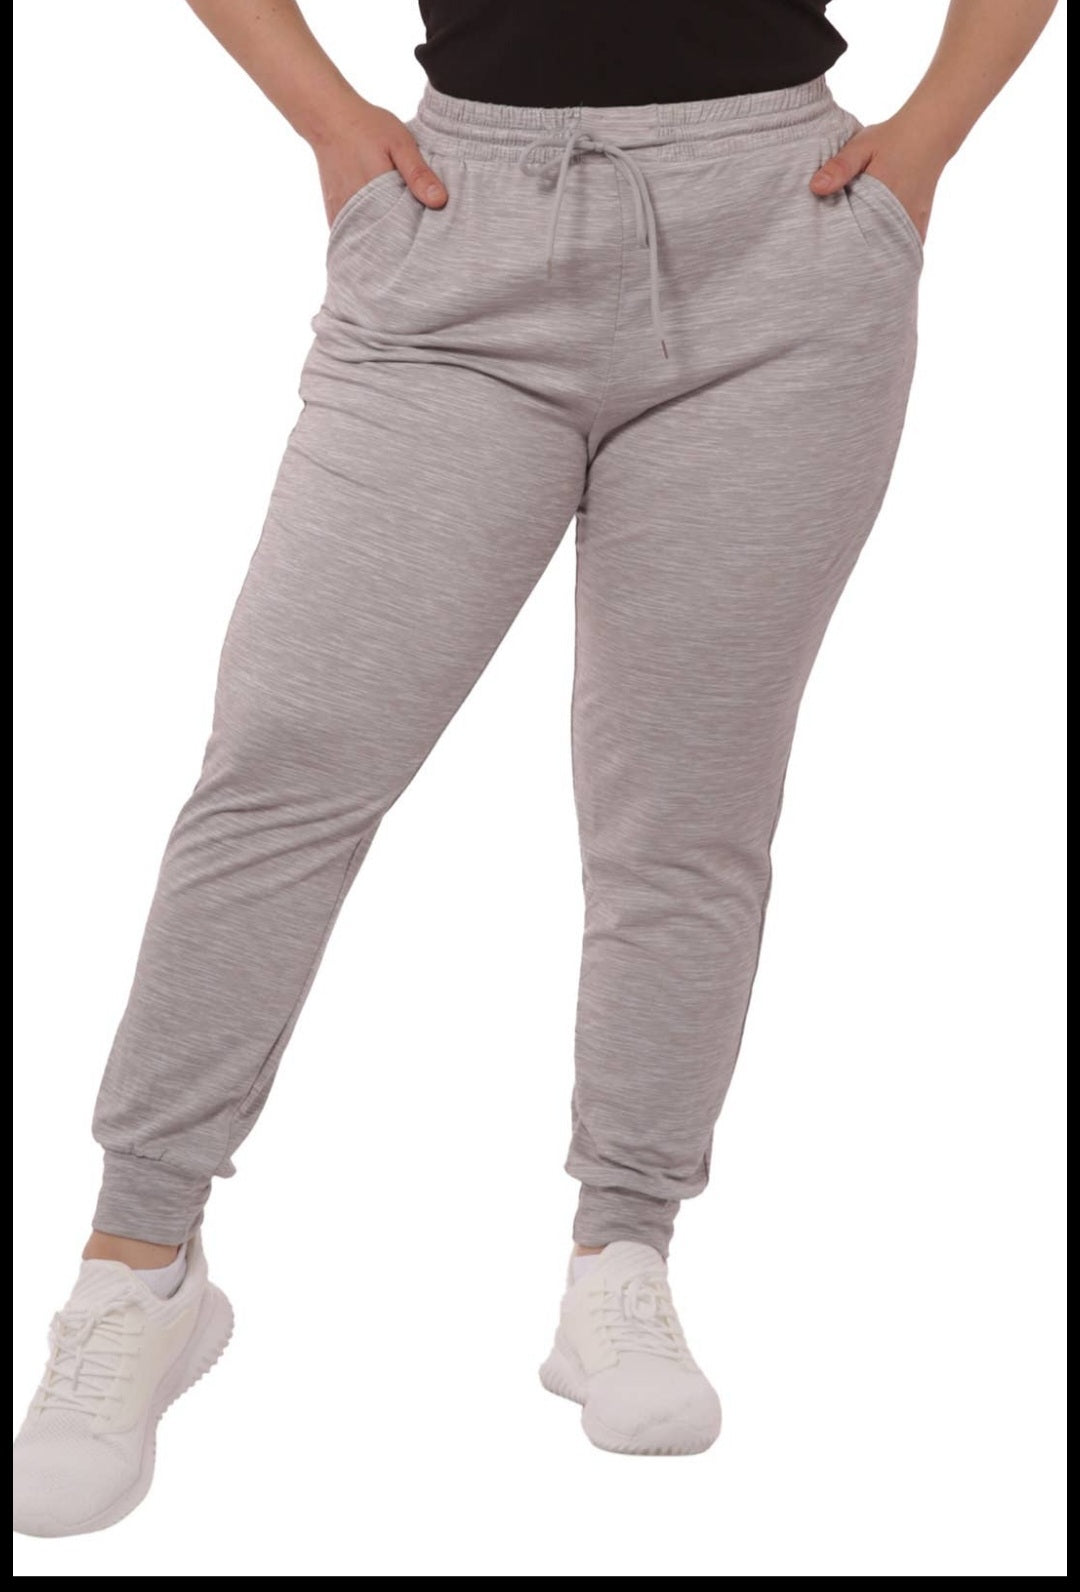 Plus sized soft brushed fleeced lined jogger sweatpants